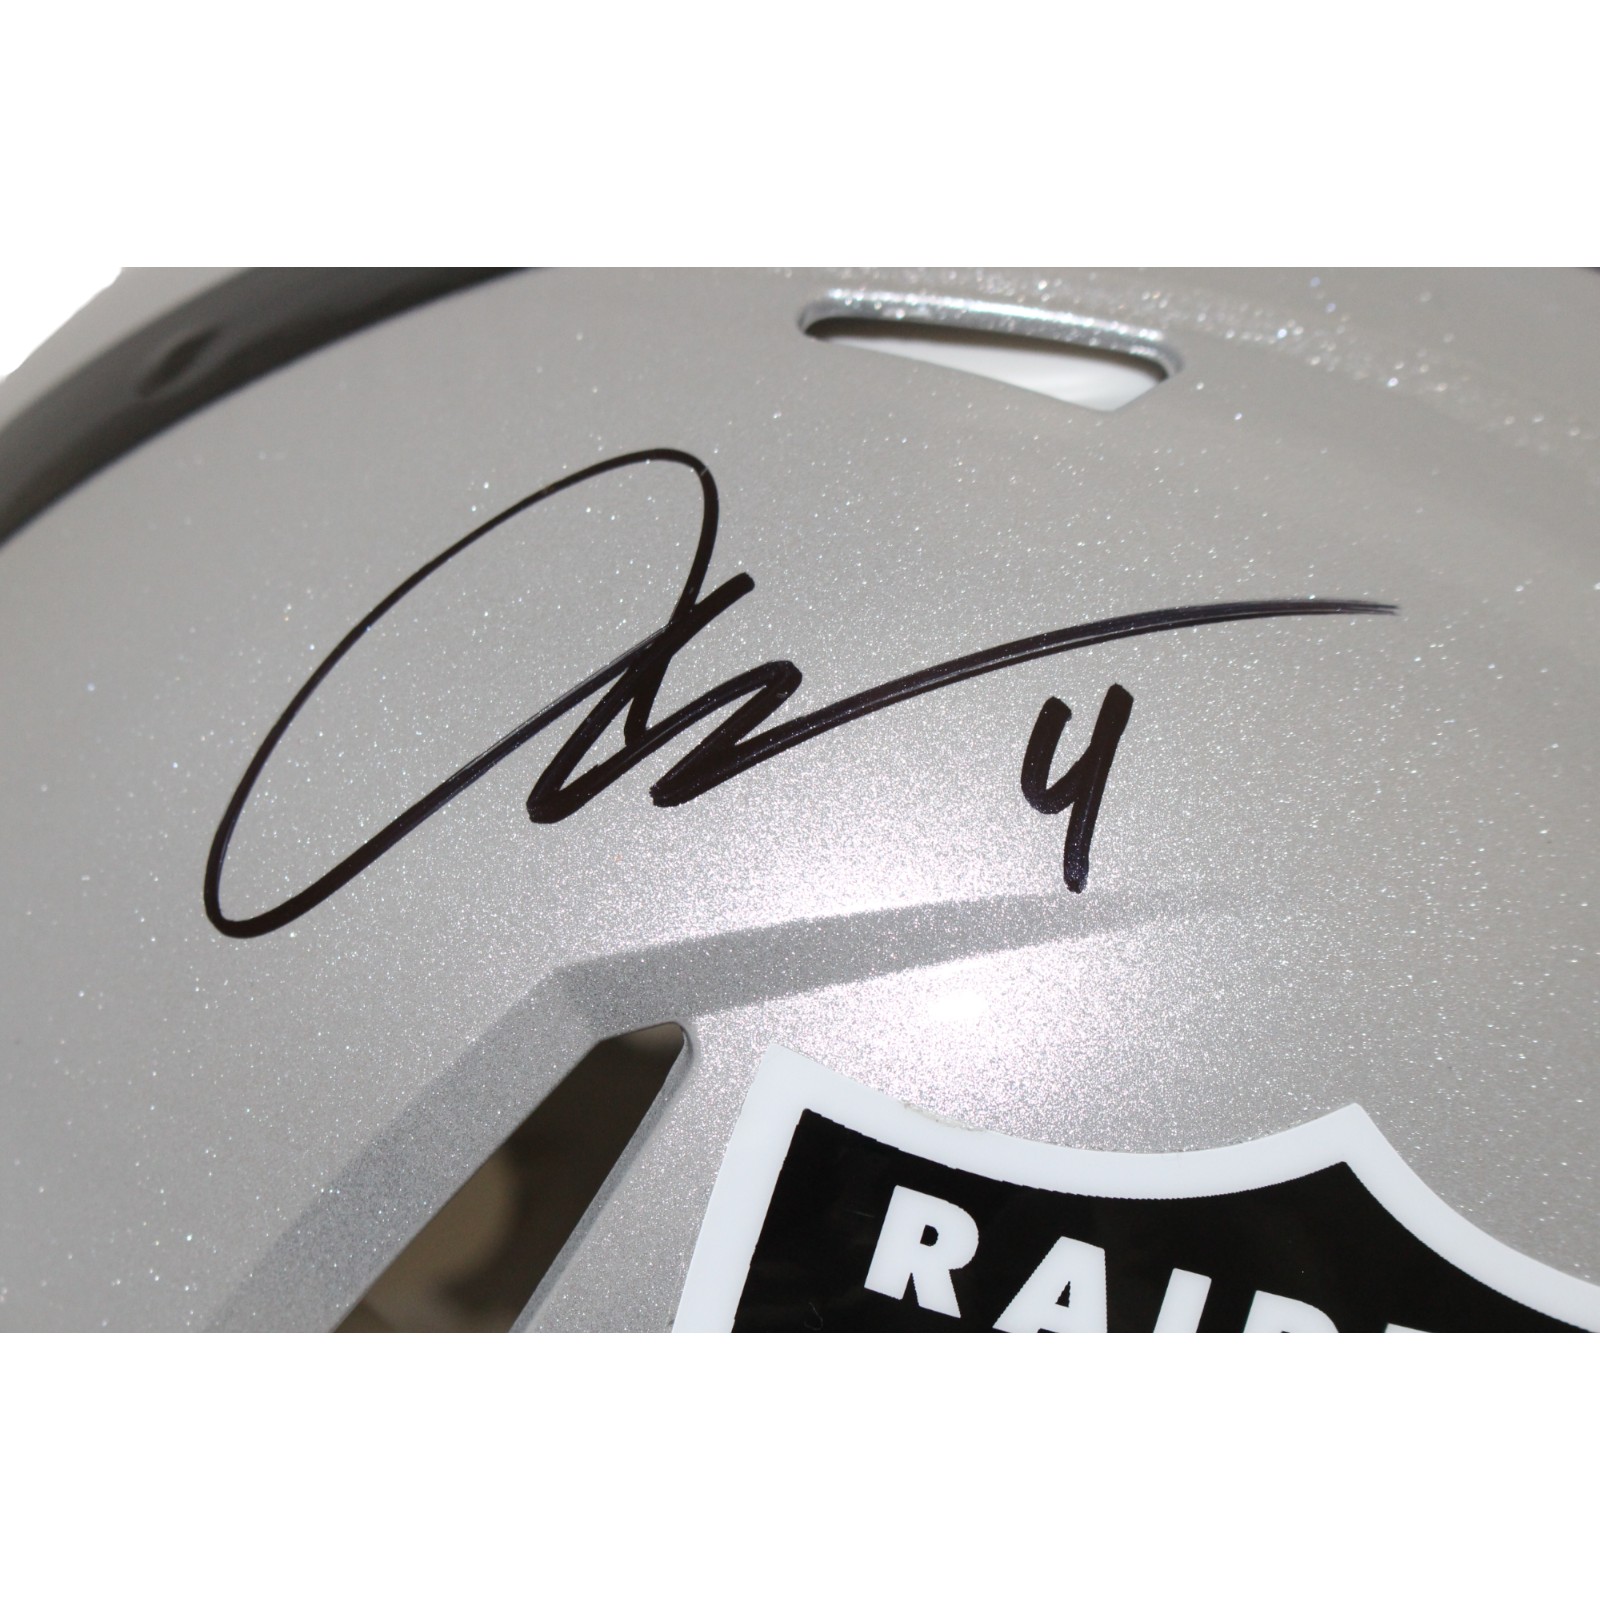 Aidan O'Connell Signed Las Vegas Raiders Authentic Helmet Insc Beckett